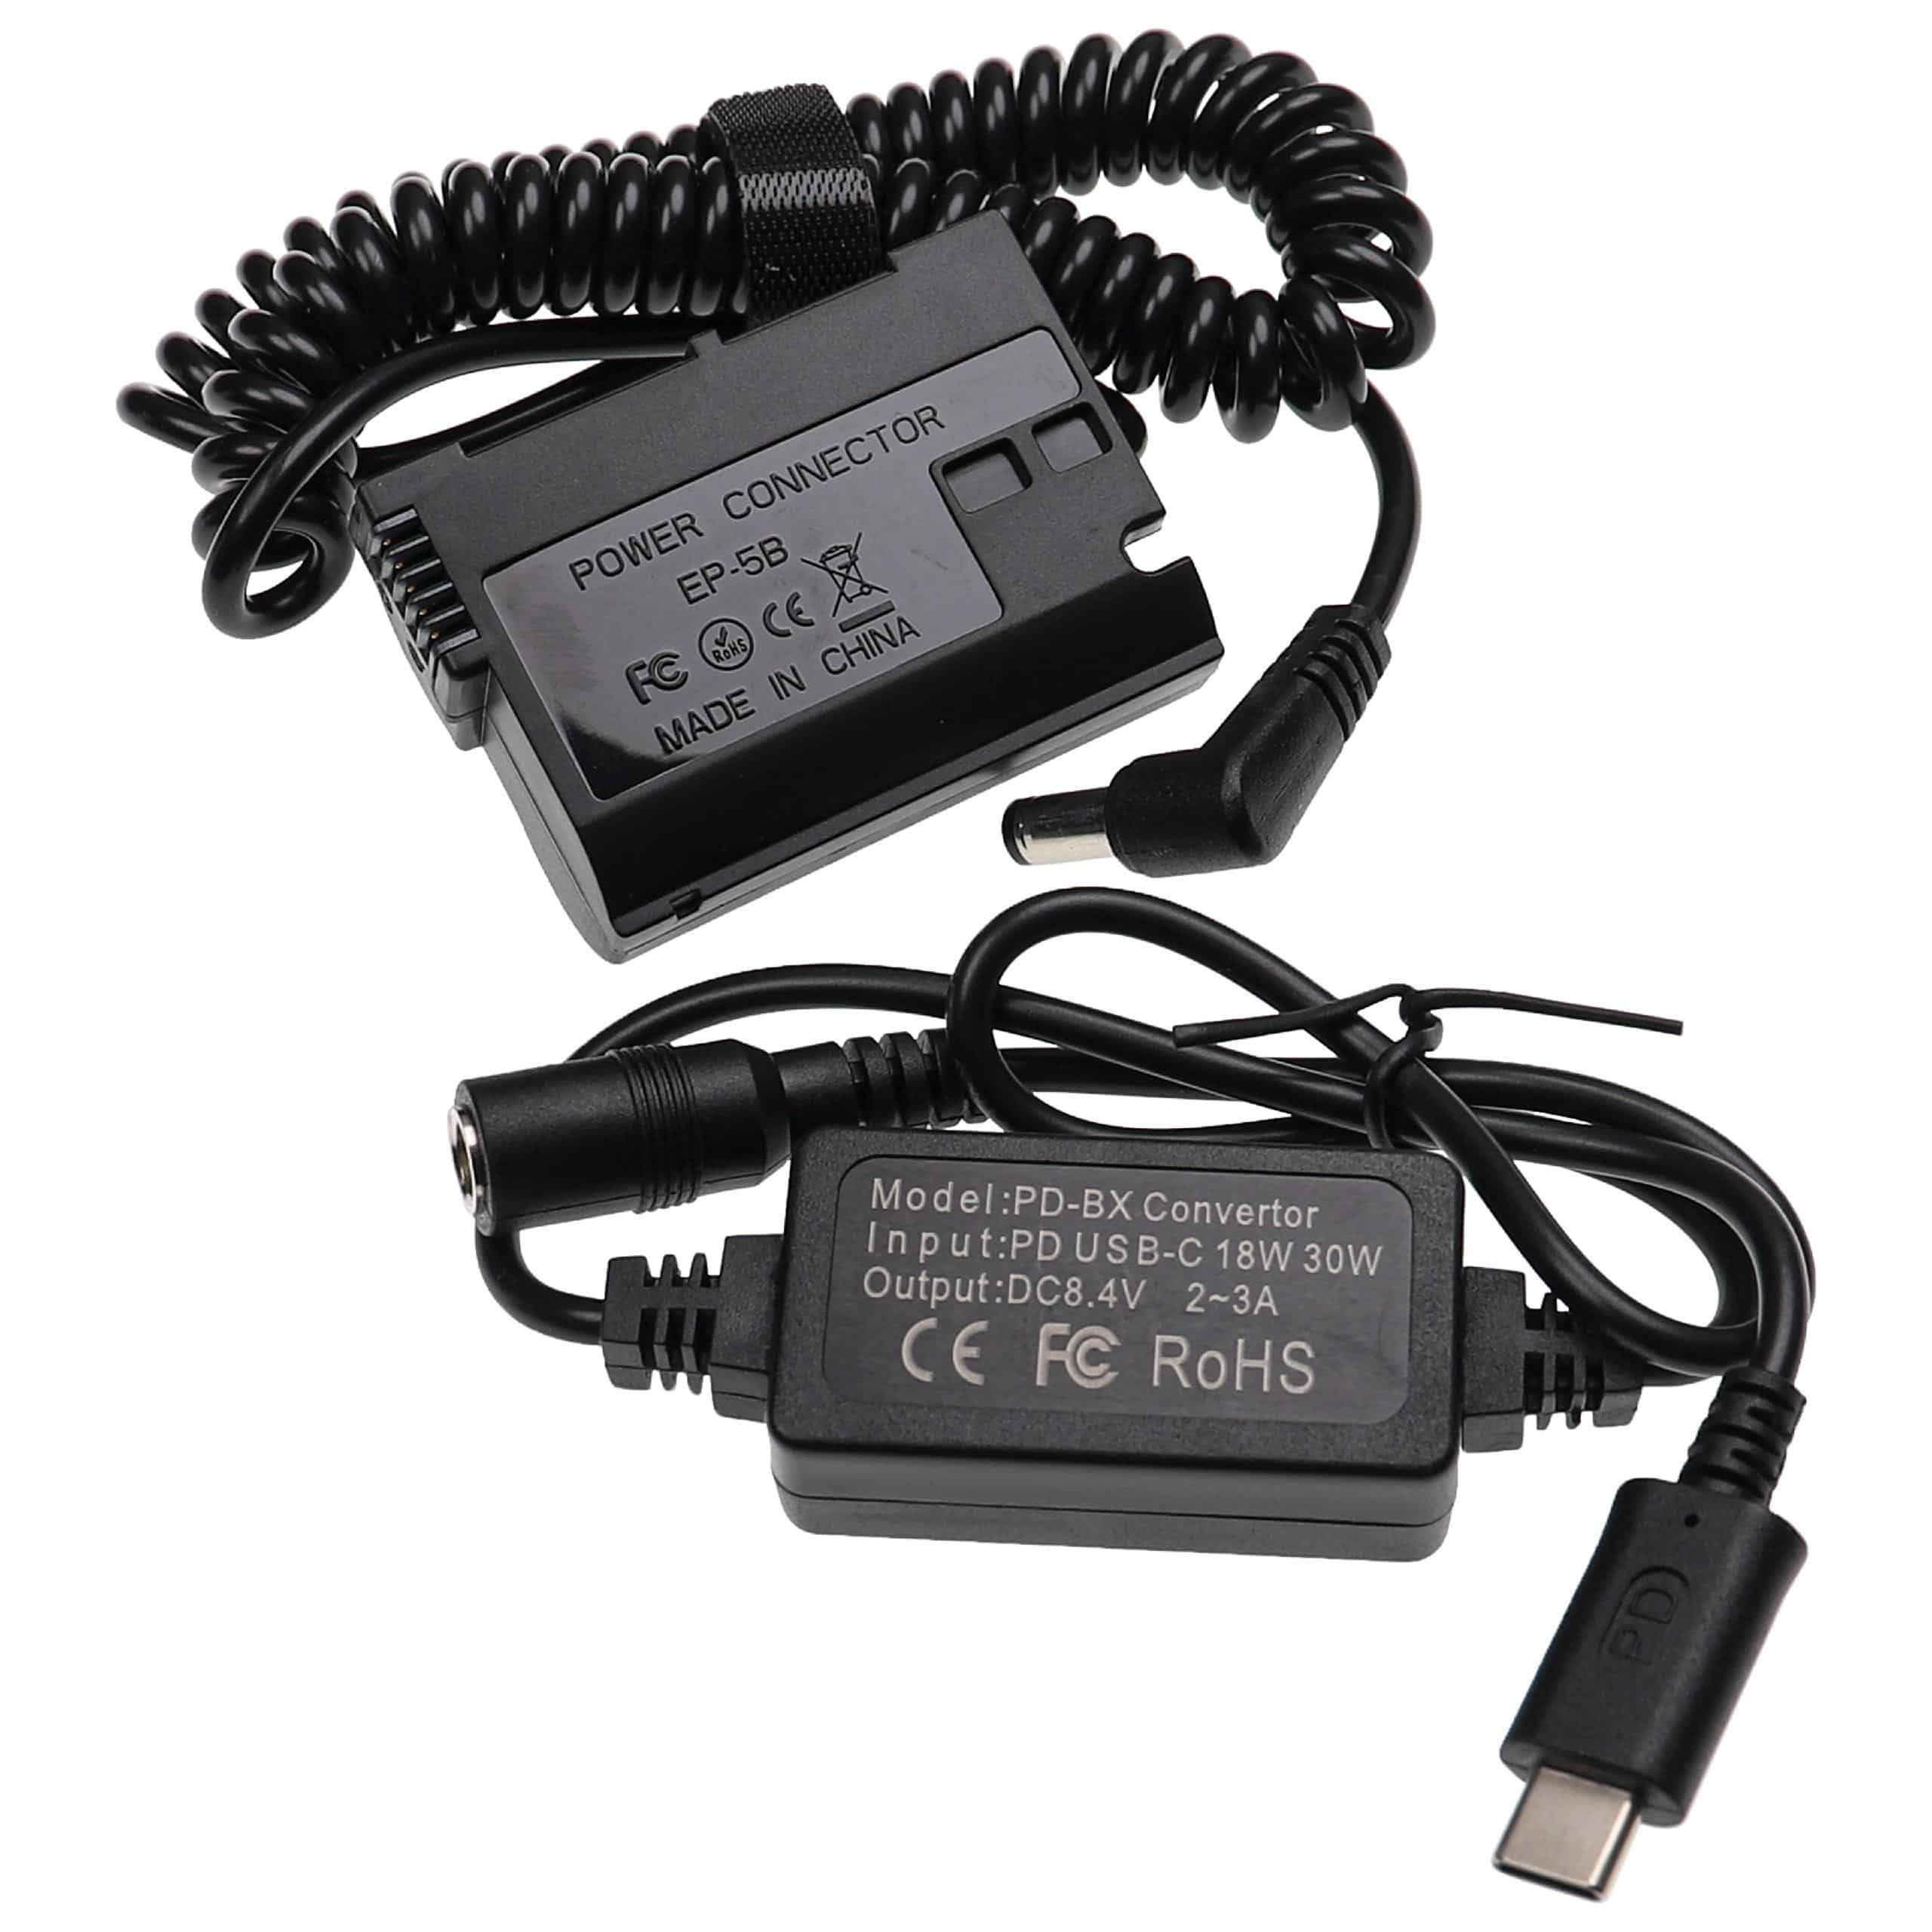 Zasilacz USB do aparatu zam. EN-EL15AEN-EL15EN-EL15b + adapter zam. Nikon EP-5B - 2 m, 8,4 V 3,0 A